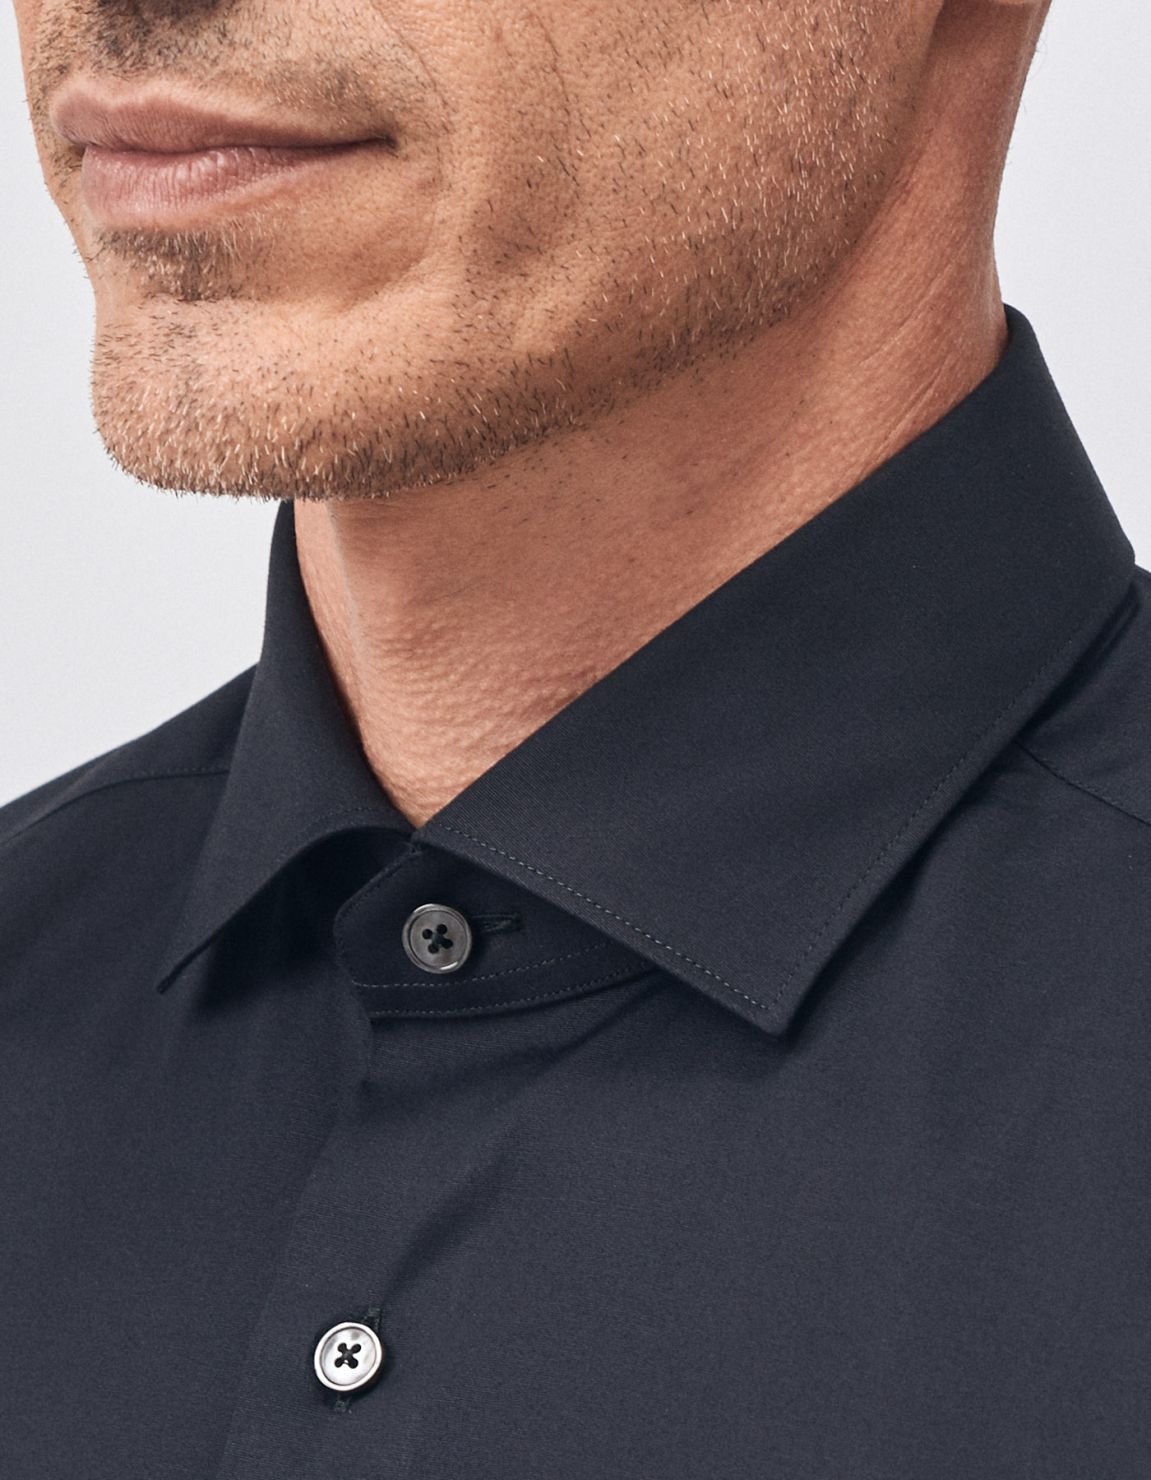 Shirt Collar small cutaway Black Canvas Slim Fit 3